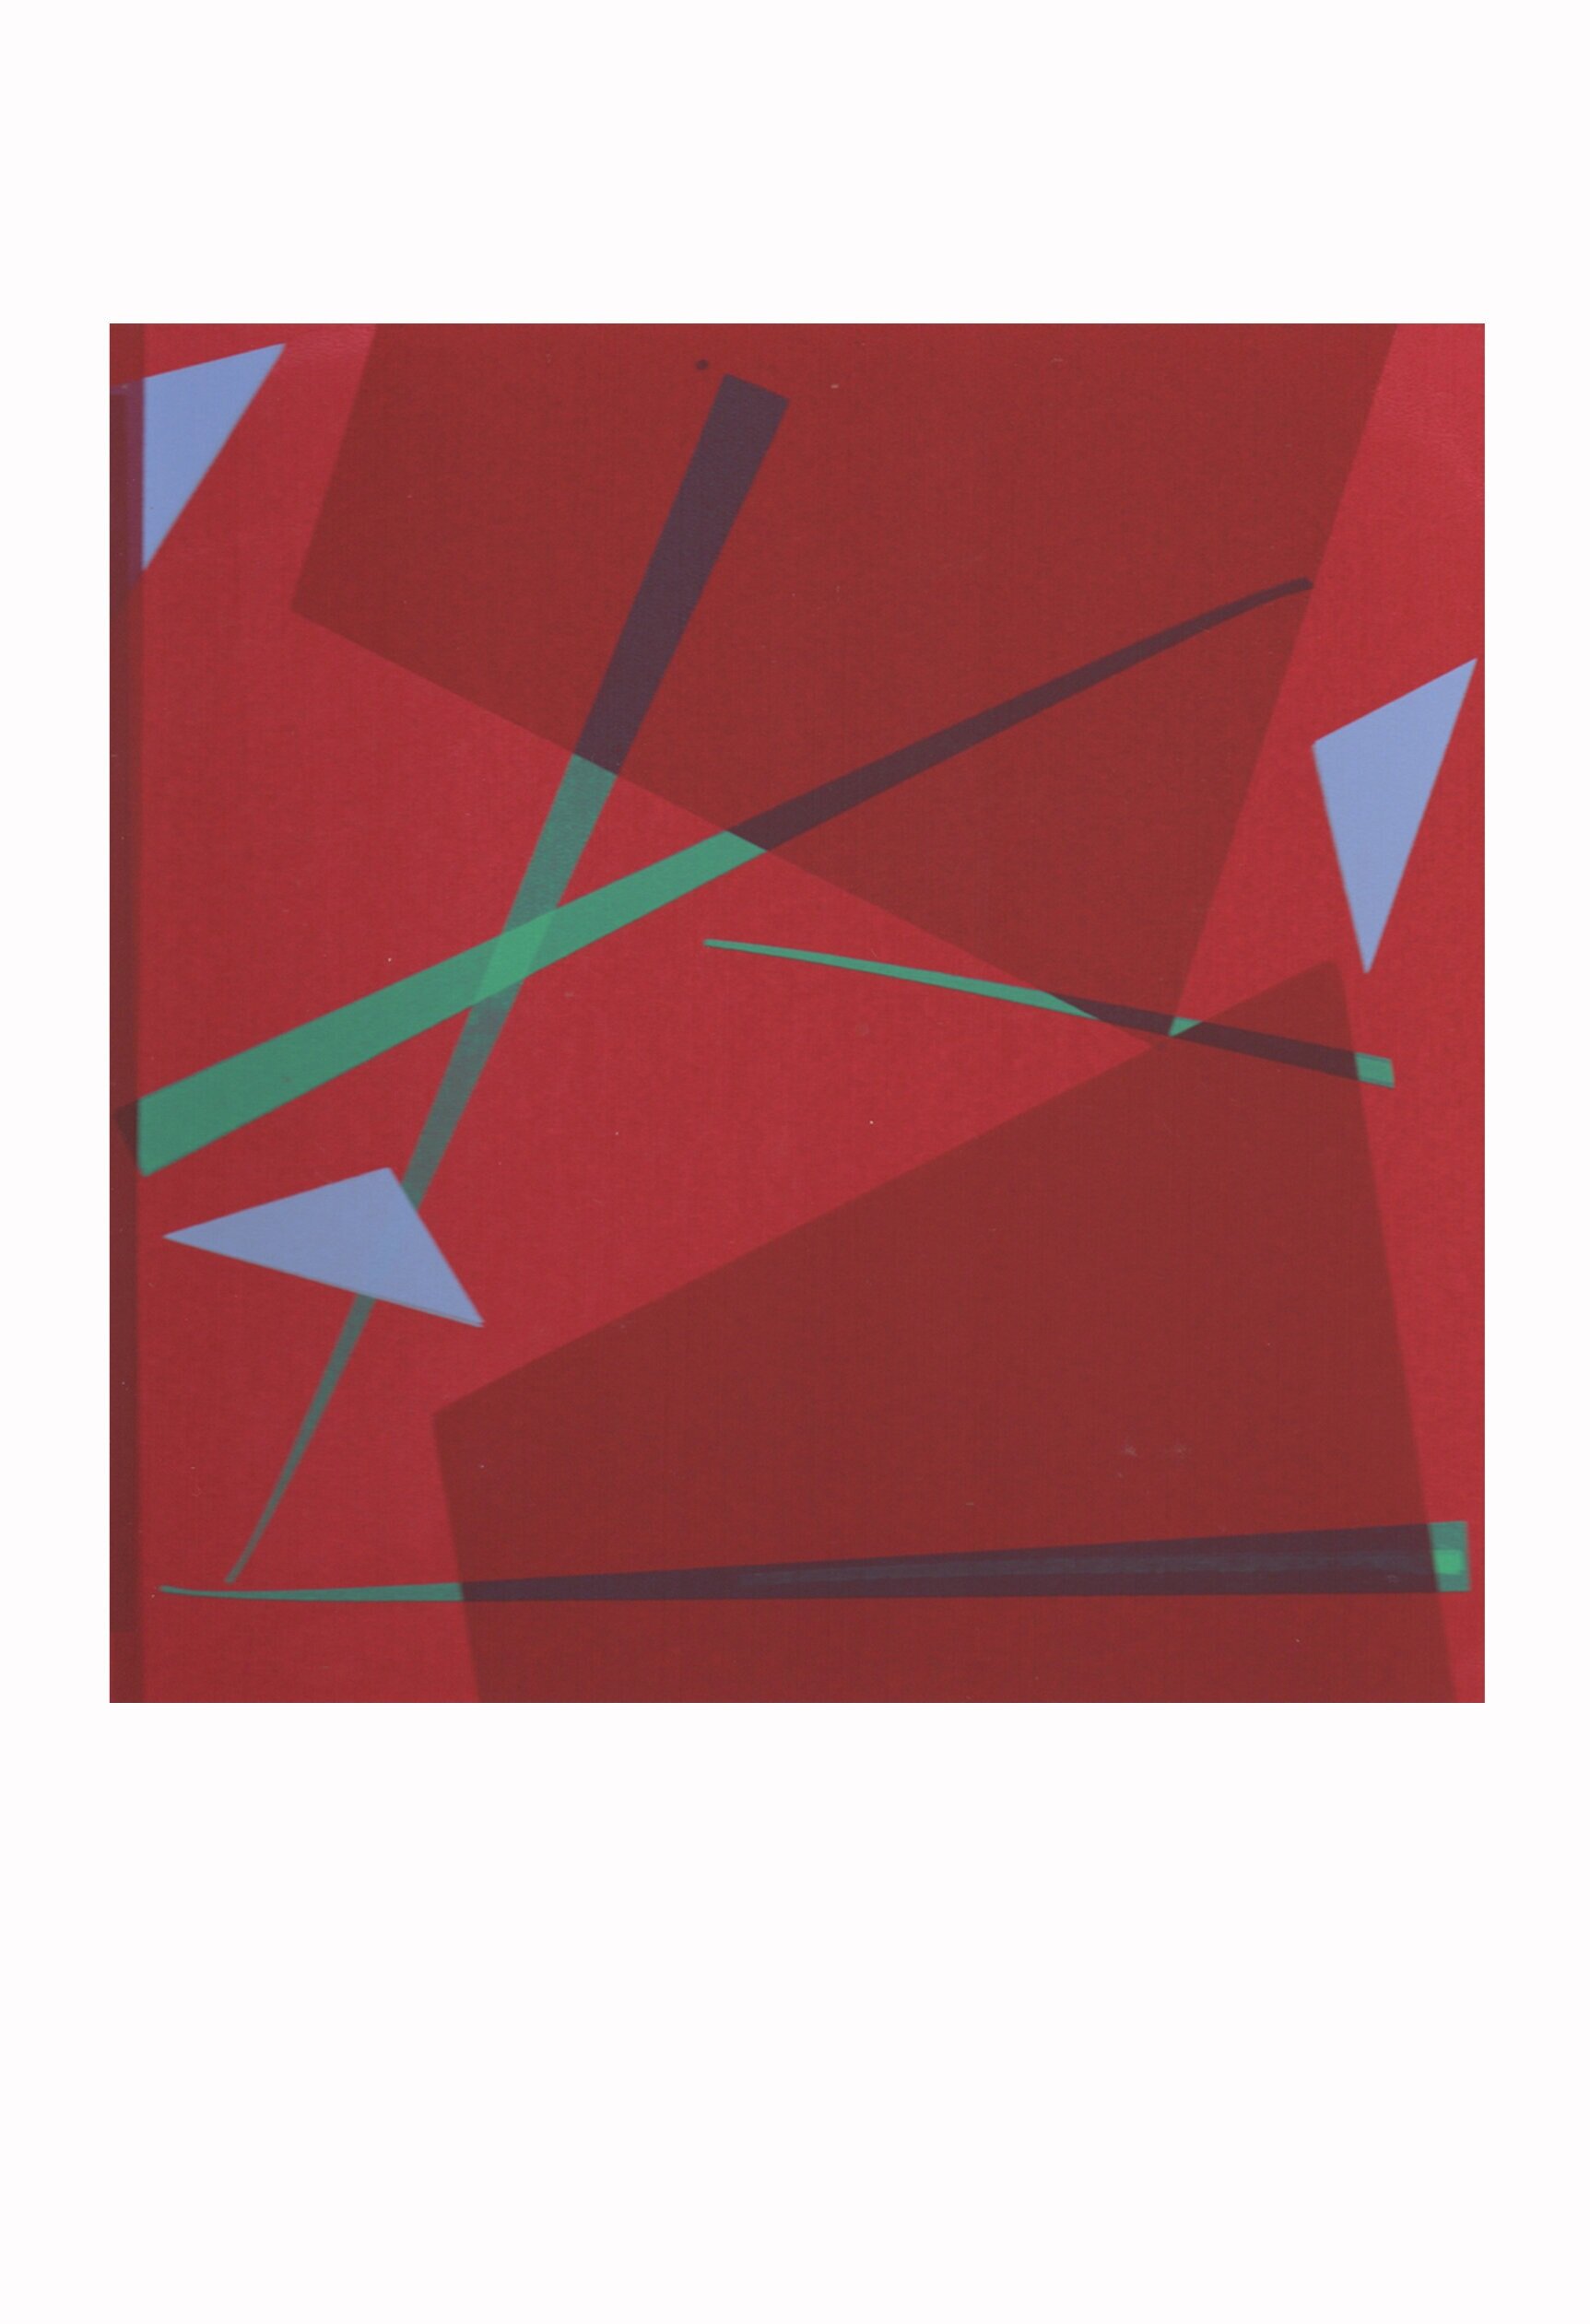   Meshwork Series , screenprint, 32cm x 45cm, 2019, (Private Collection).  